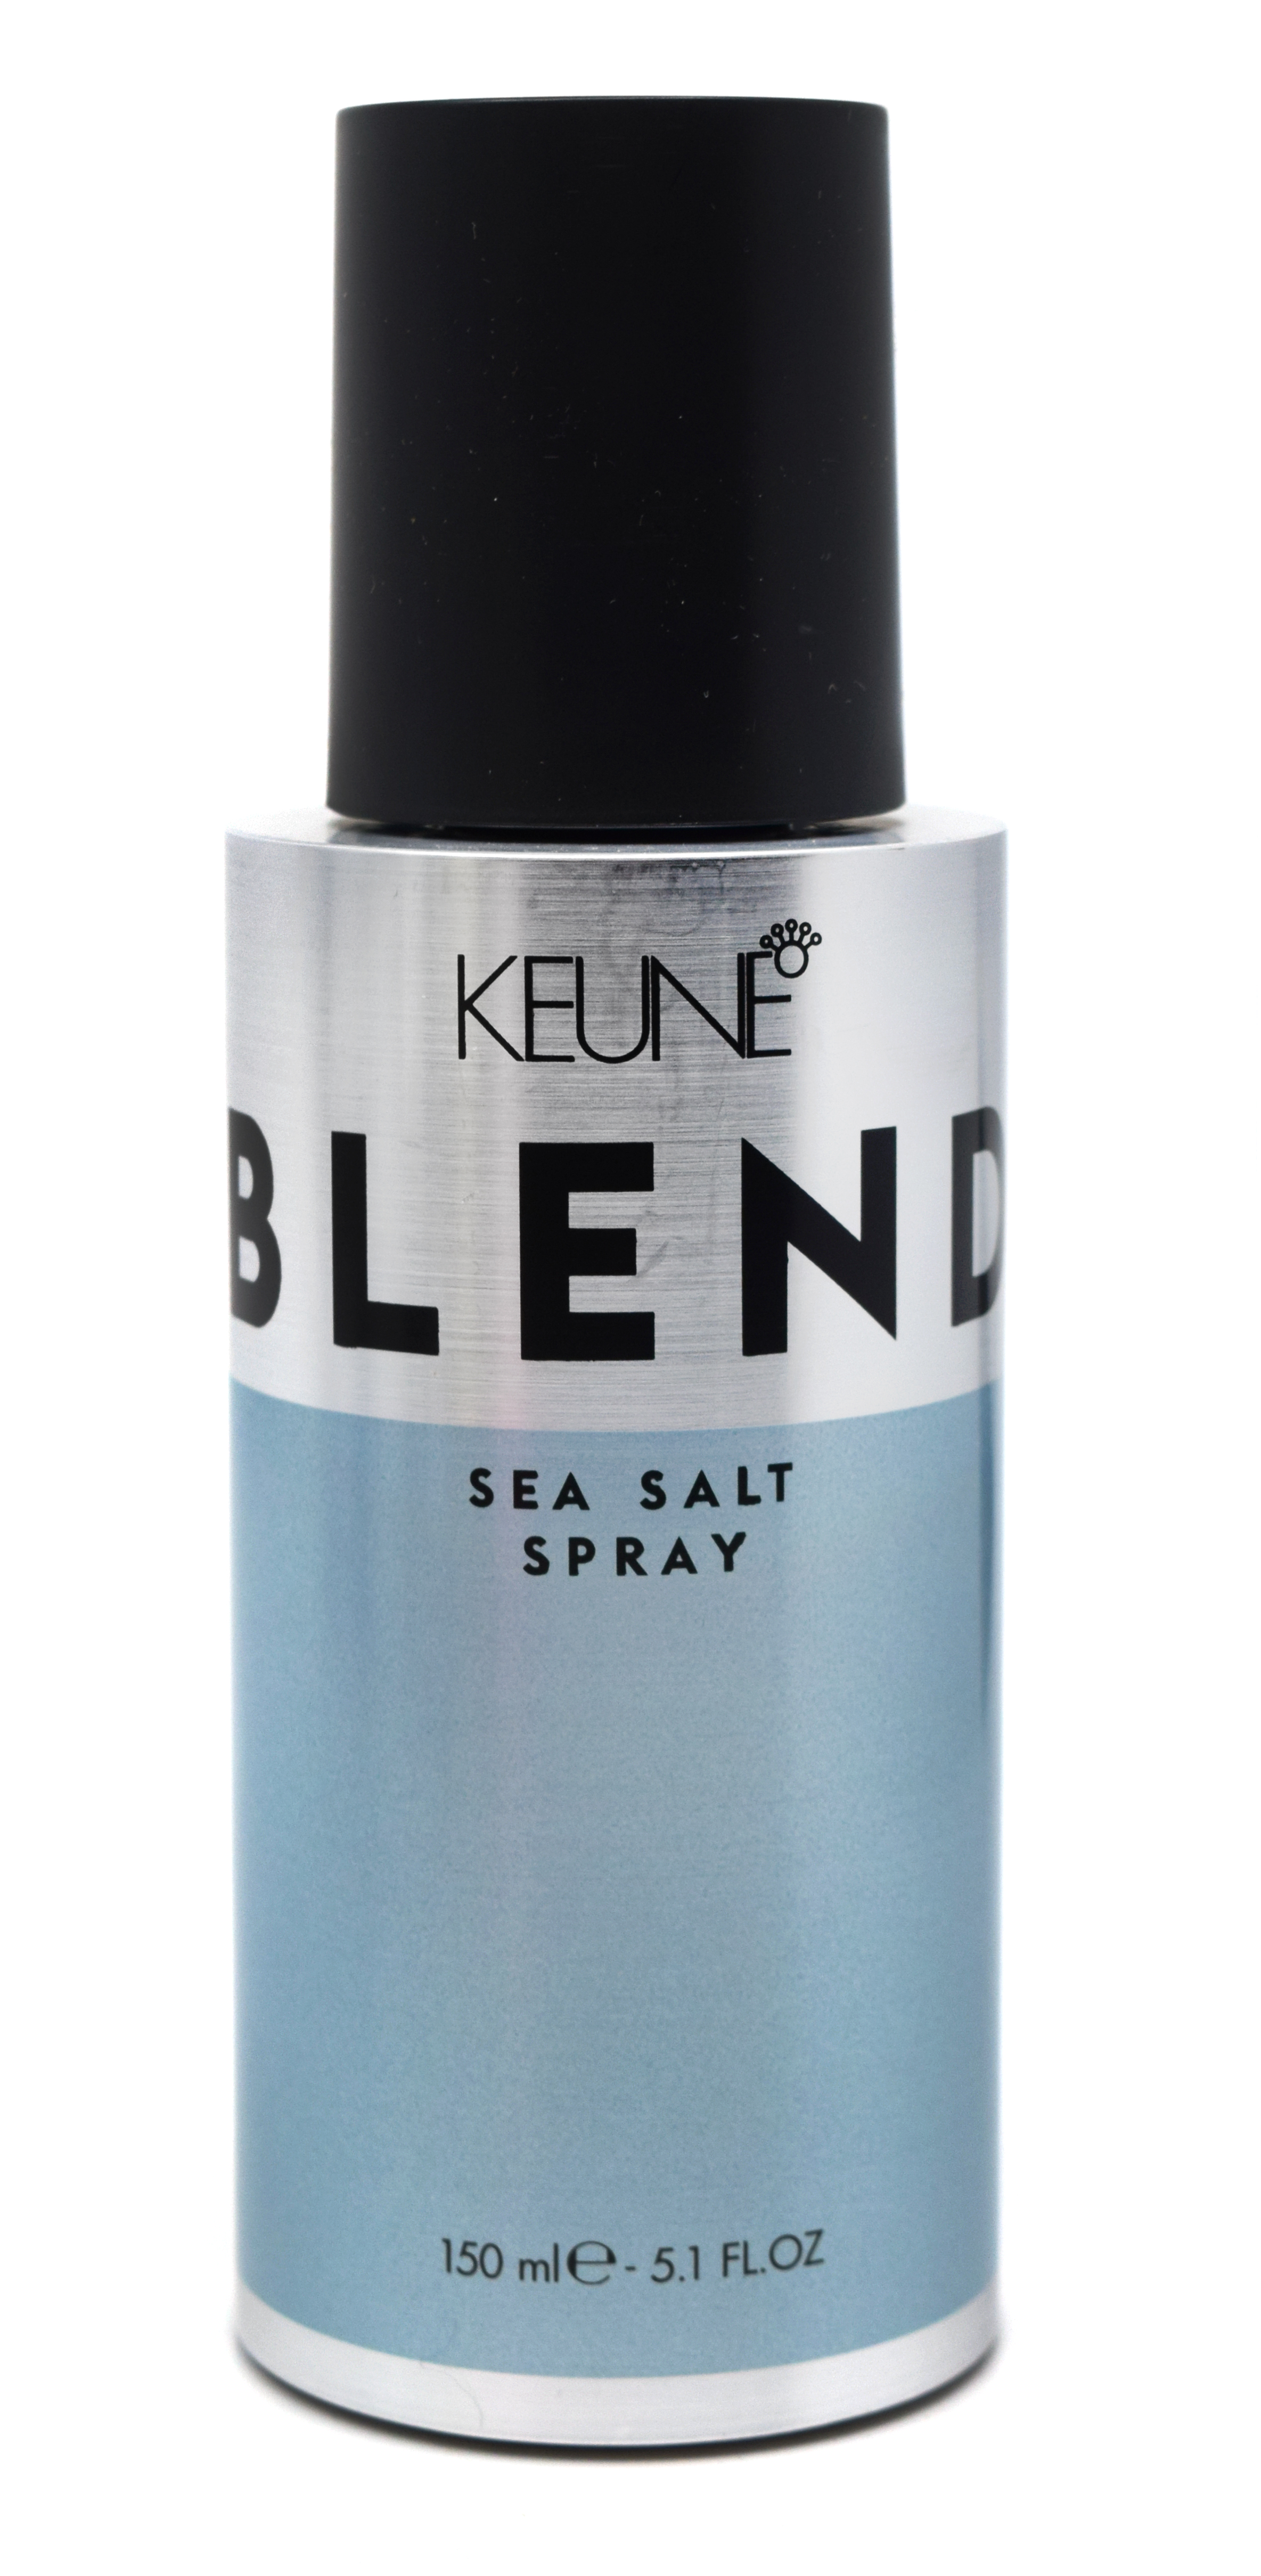 Keune Blend - Sea Salt Spray, 5.1 fl oz (150ml) 8719281000426 | eBay